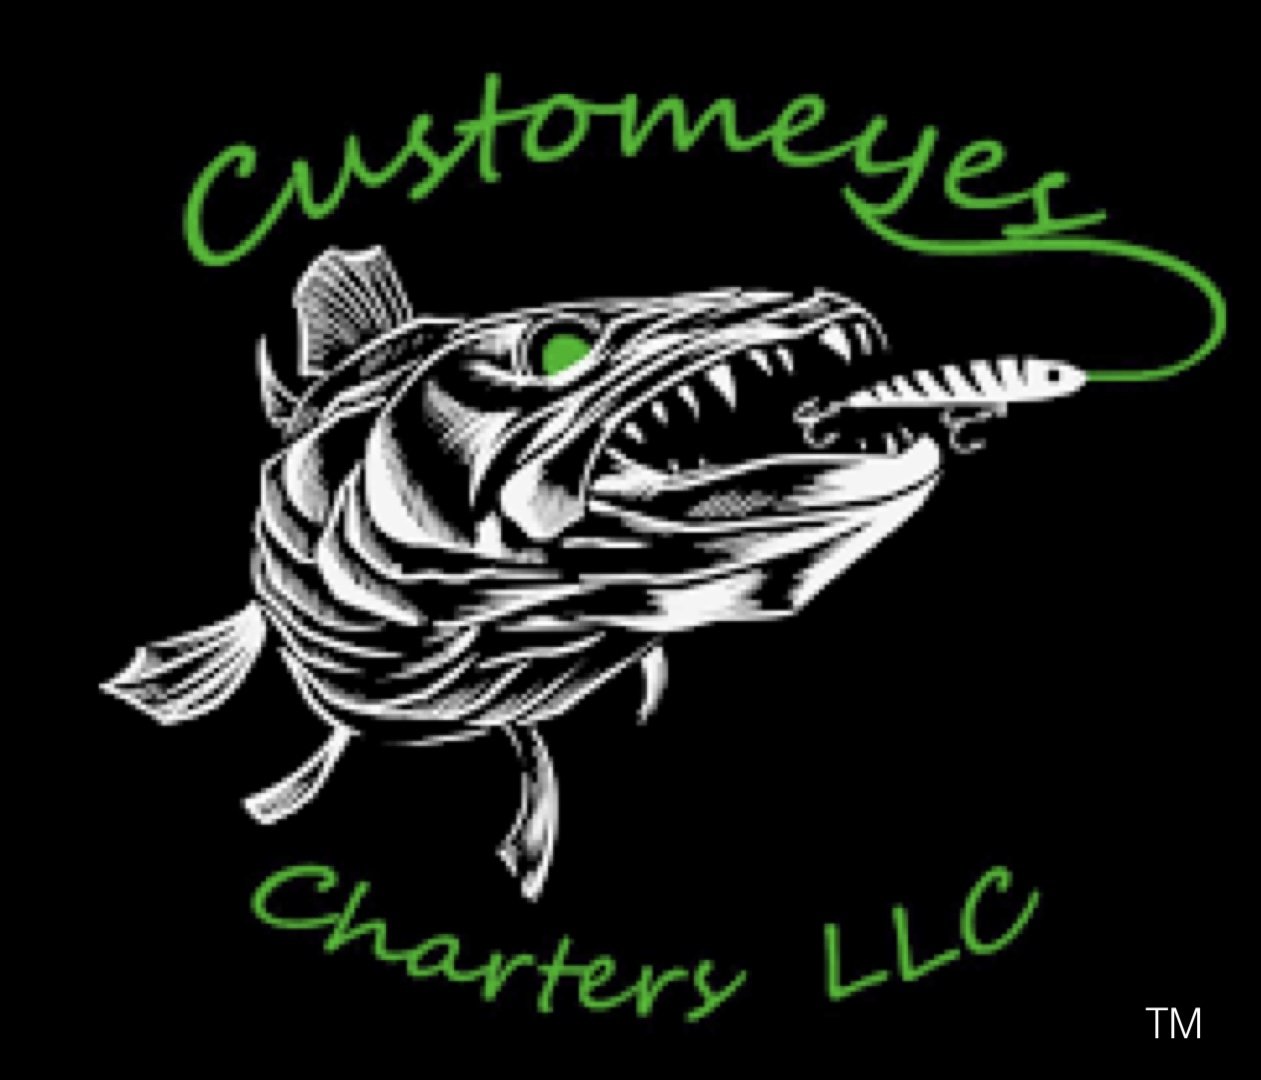 Customeyes Charters, LLC